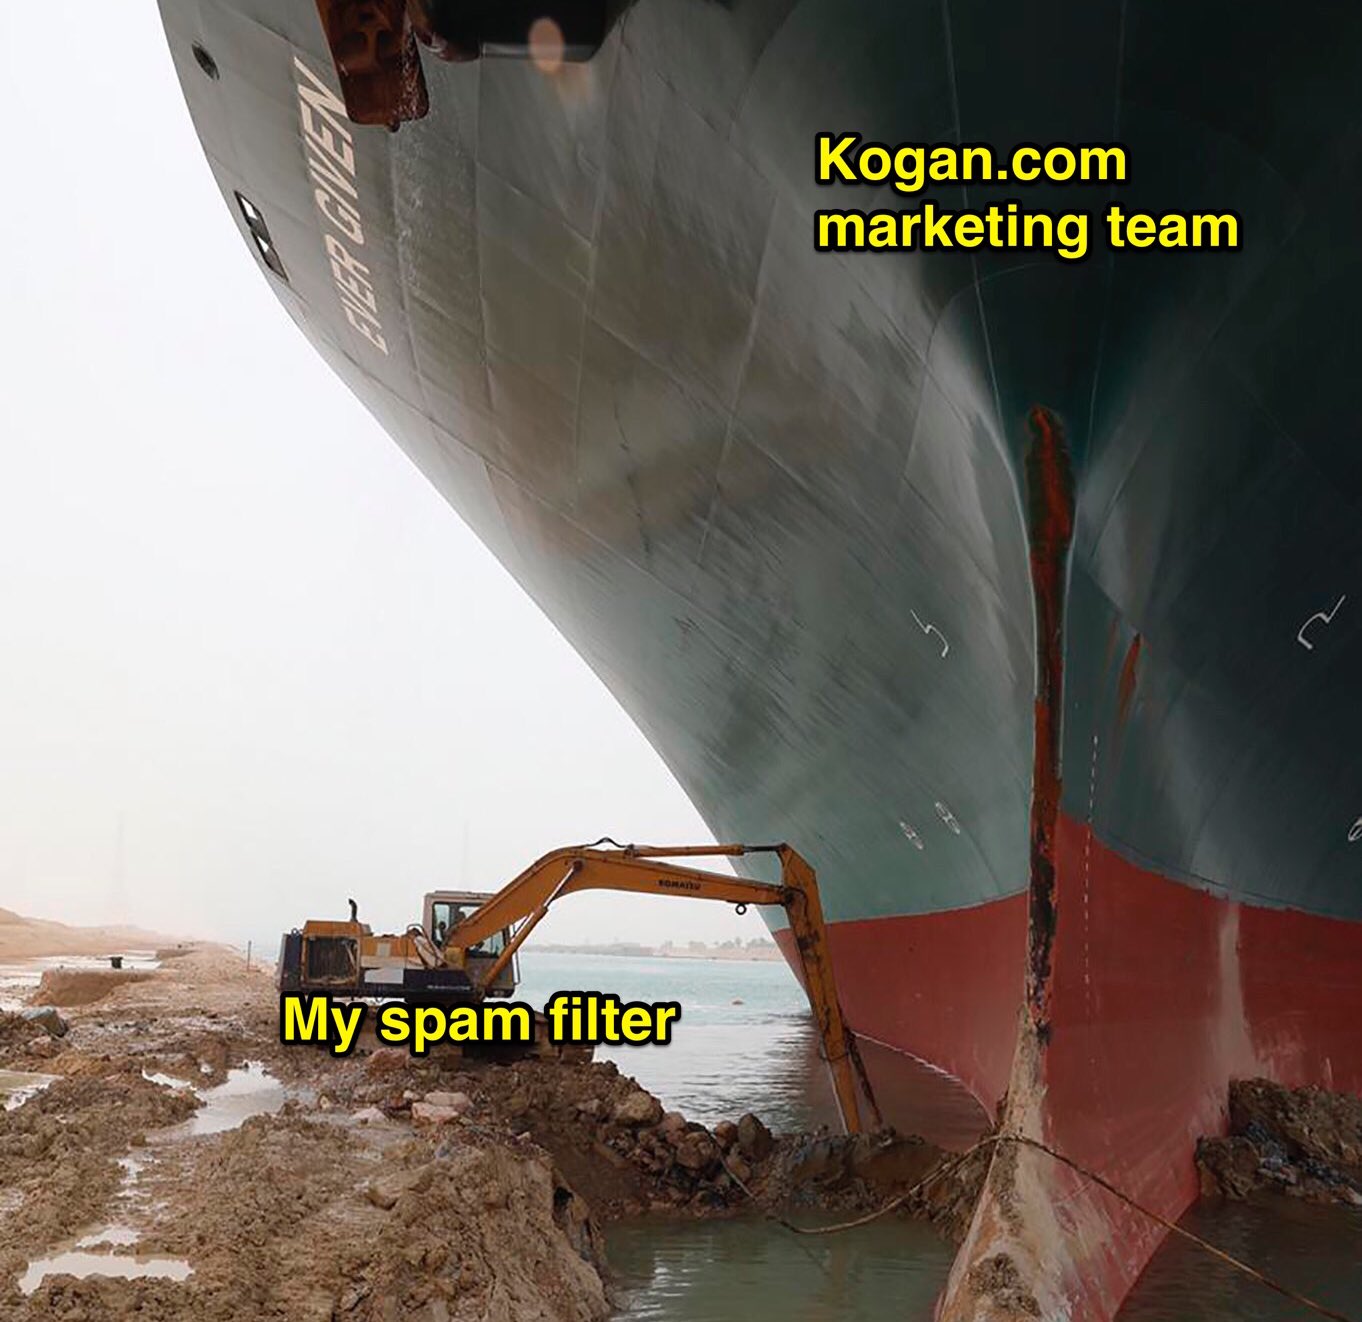 a satirical image showing the stranded supertanker depicted as Kogan marketing spam